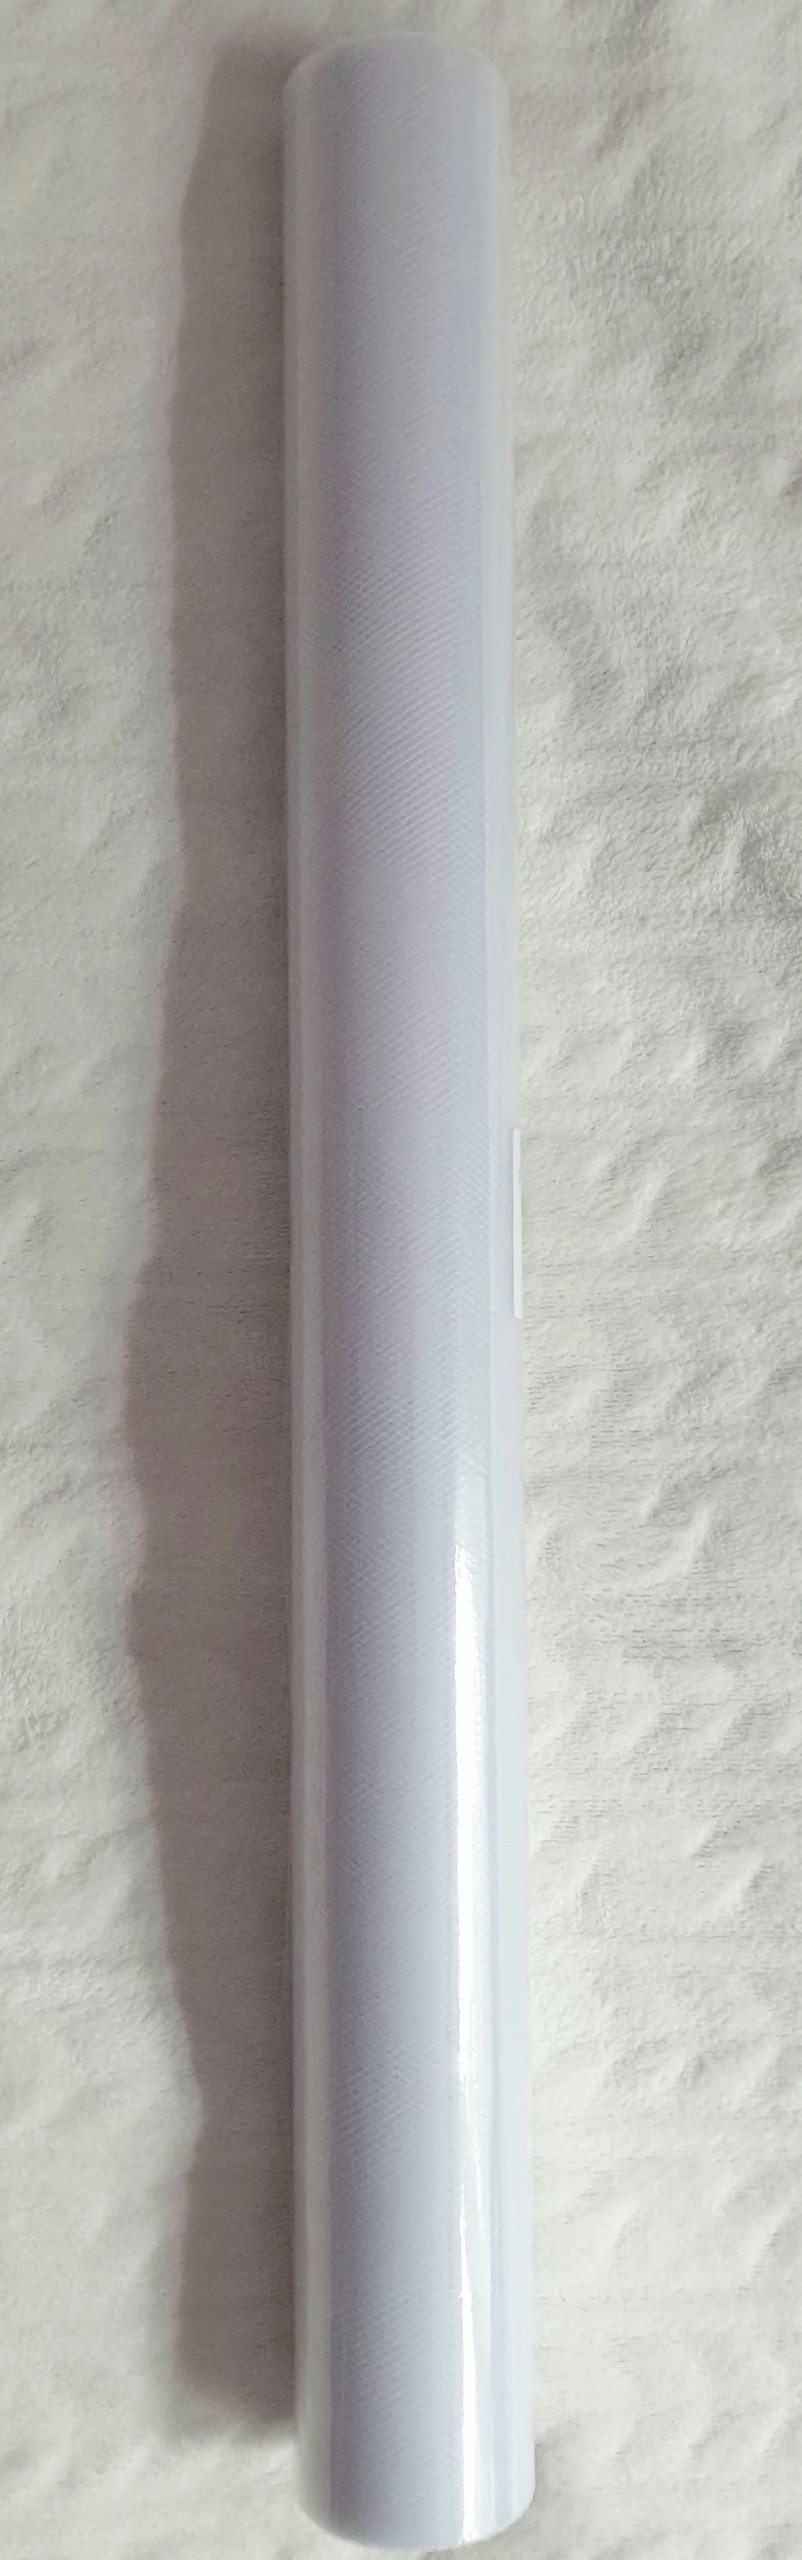 Tiul na szpulce 50cmx9m - biały